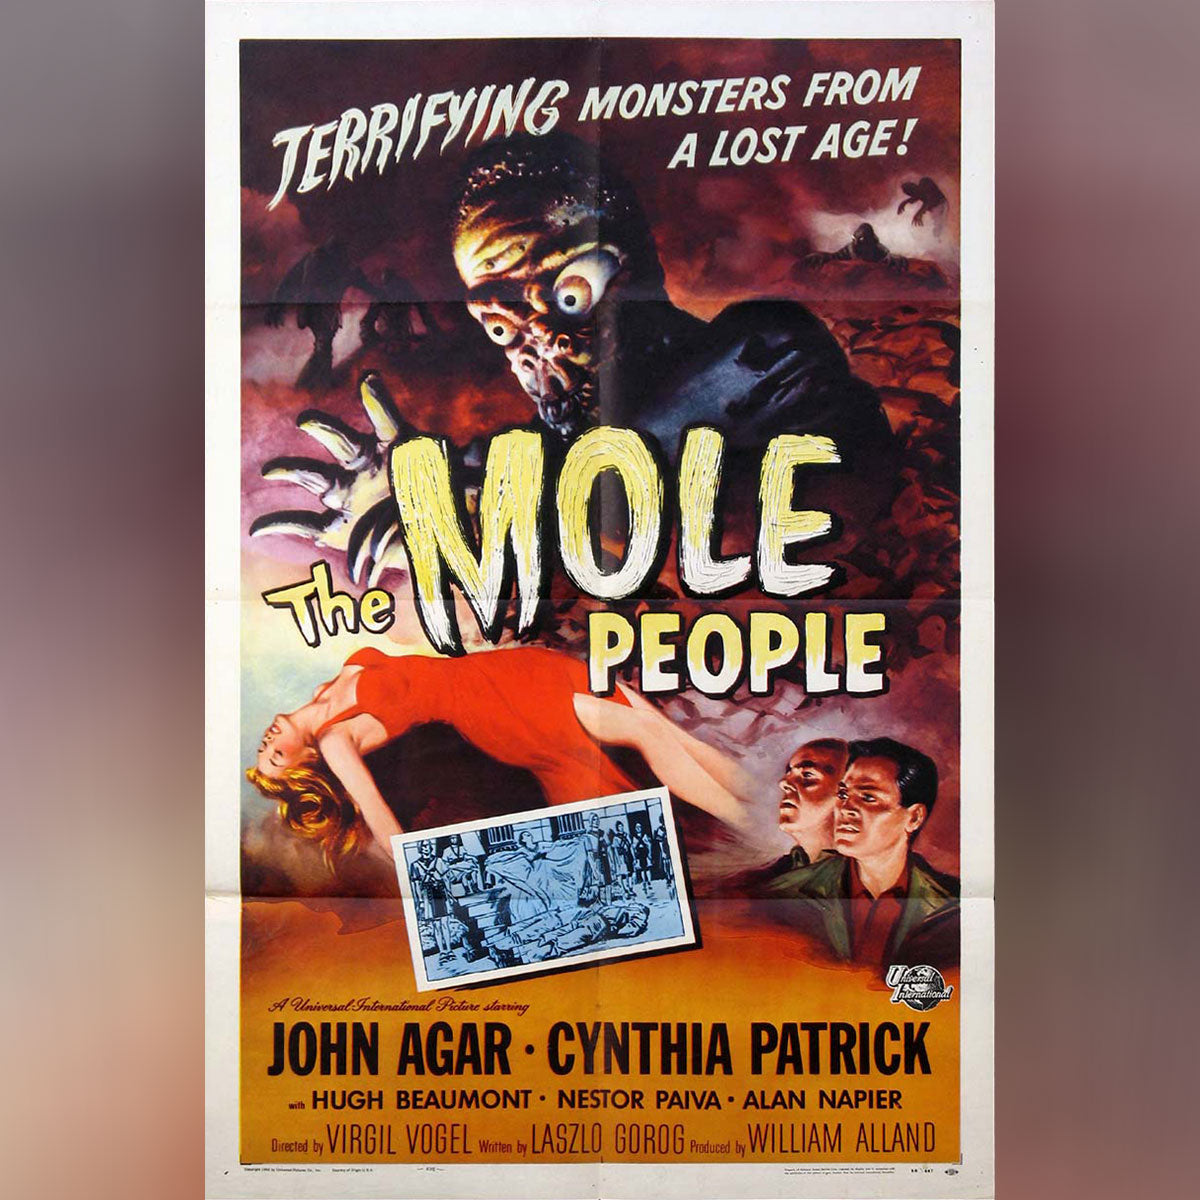 Mole People, The (1956)